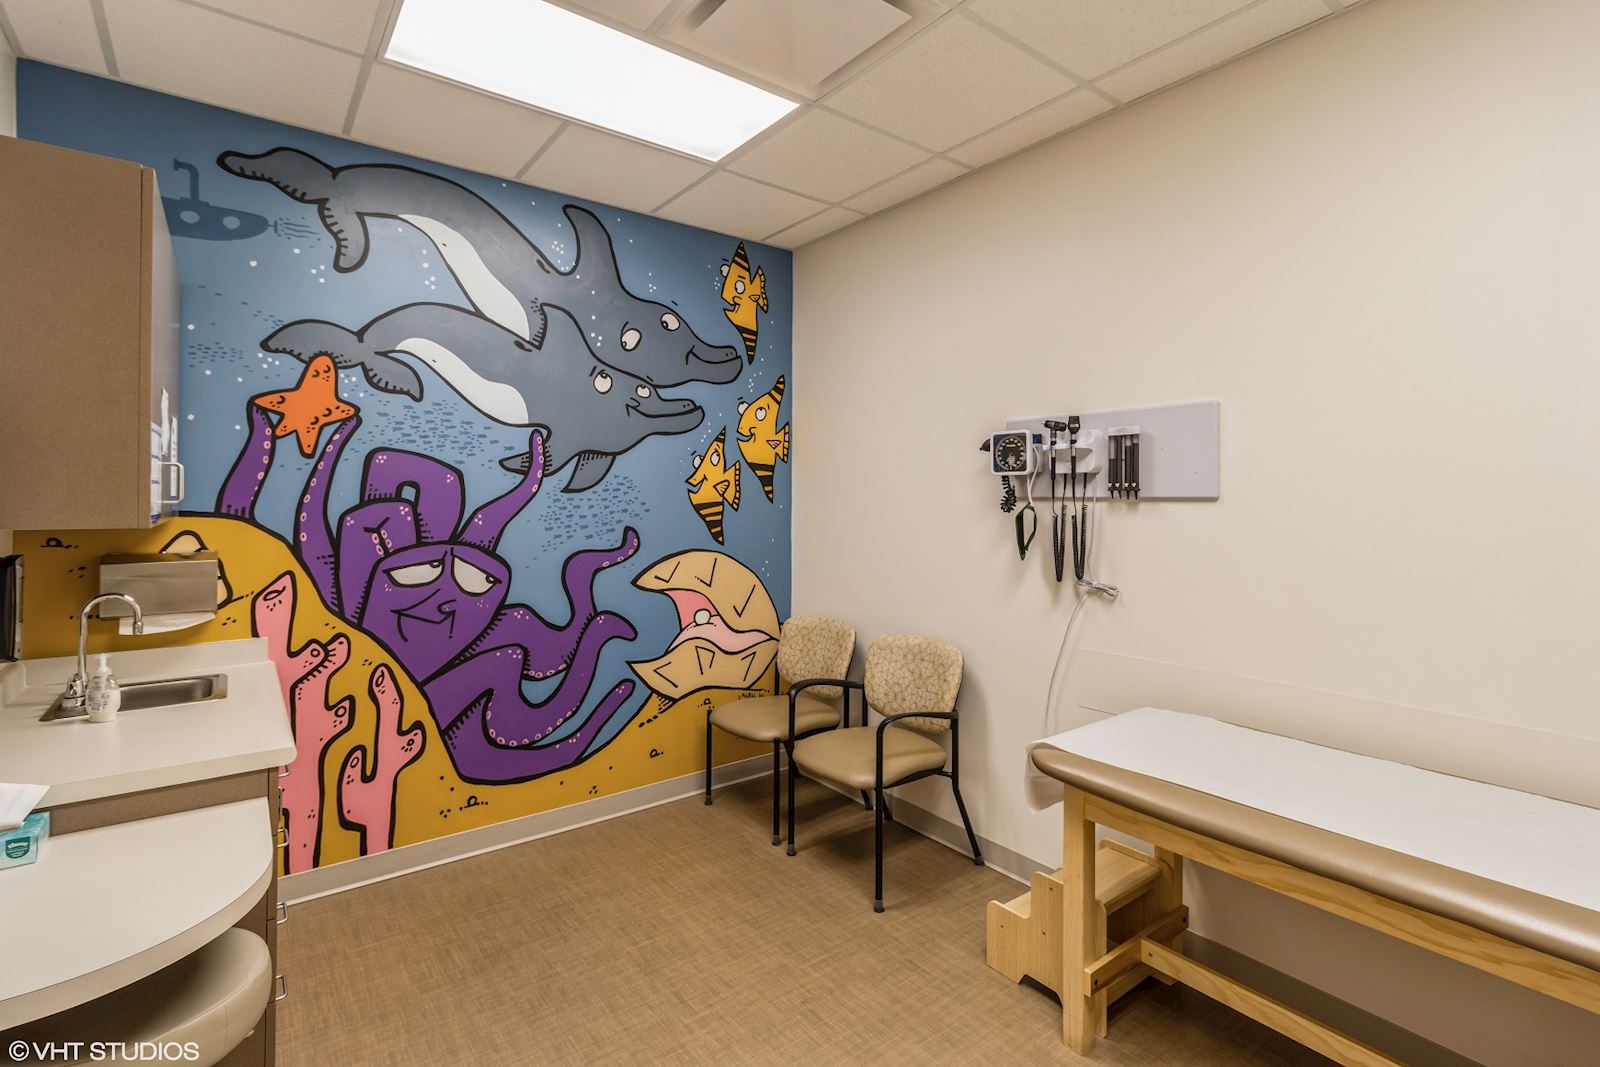 North Waukee pediatric room